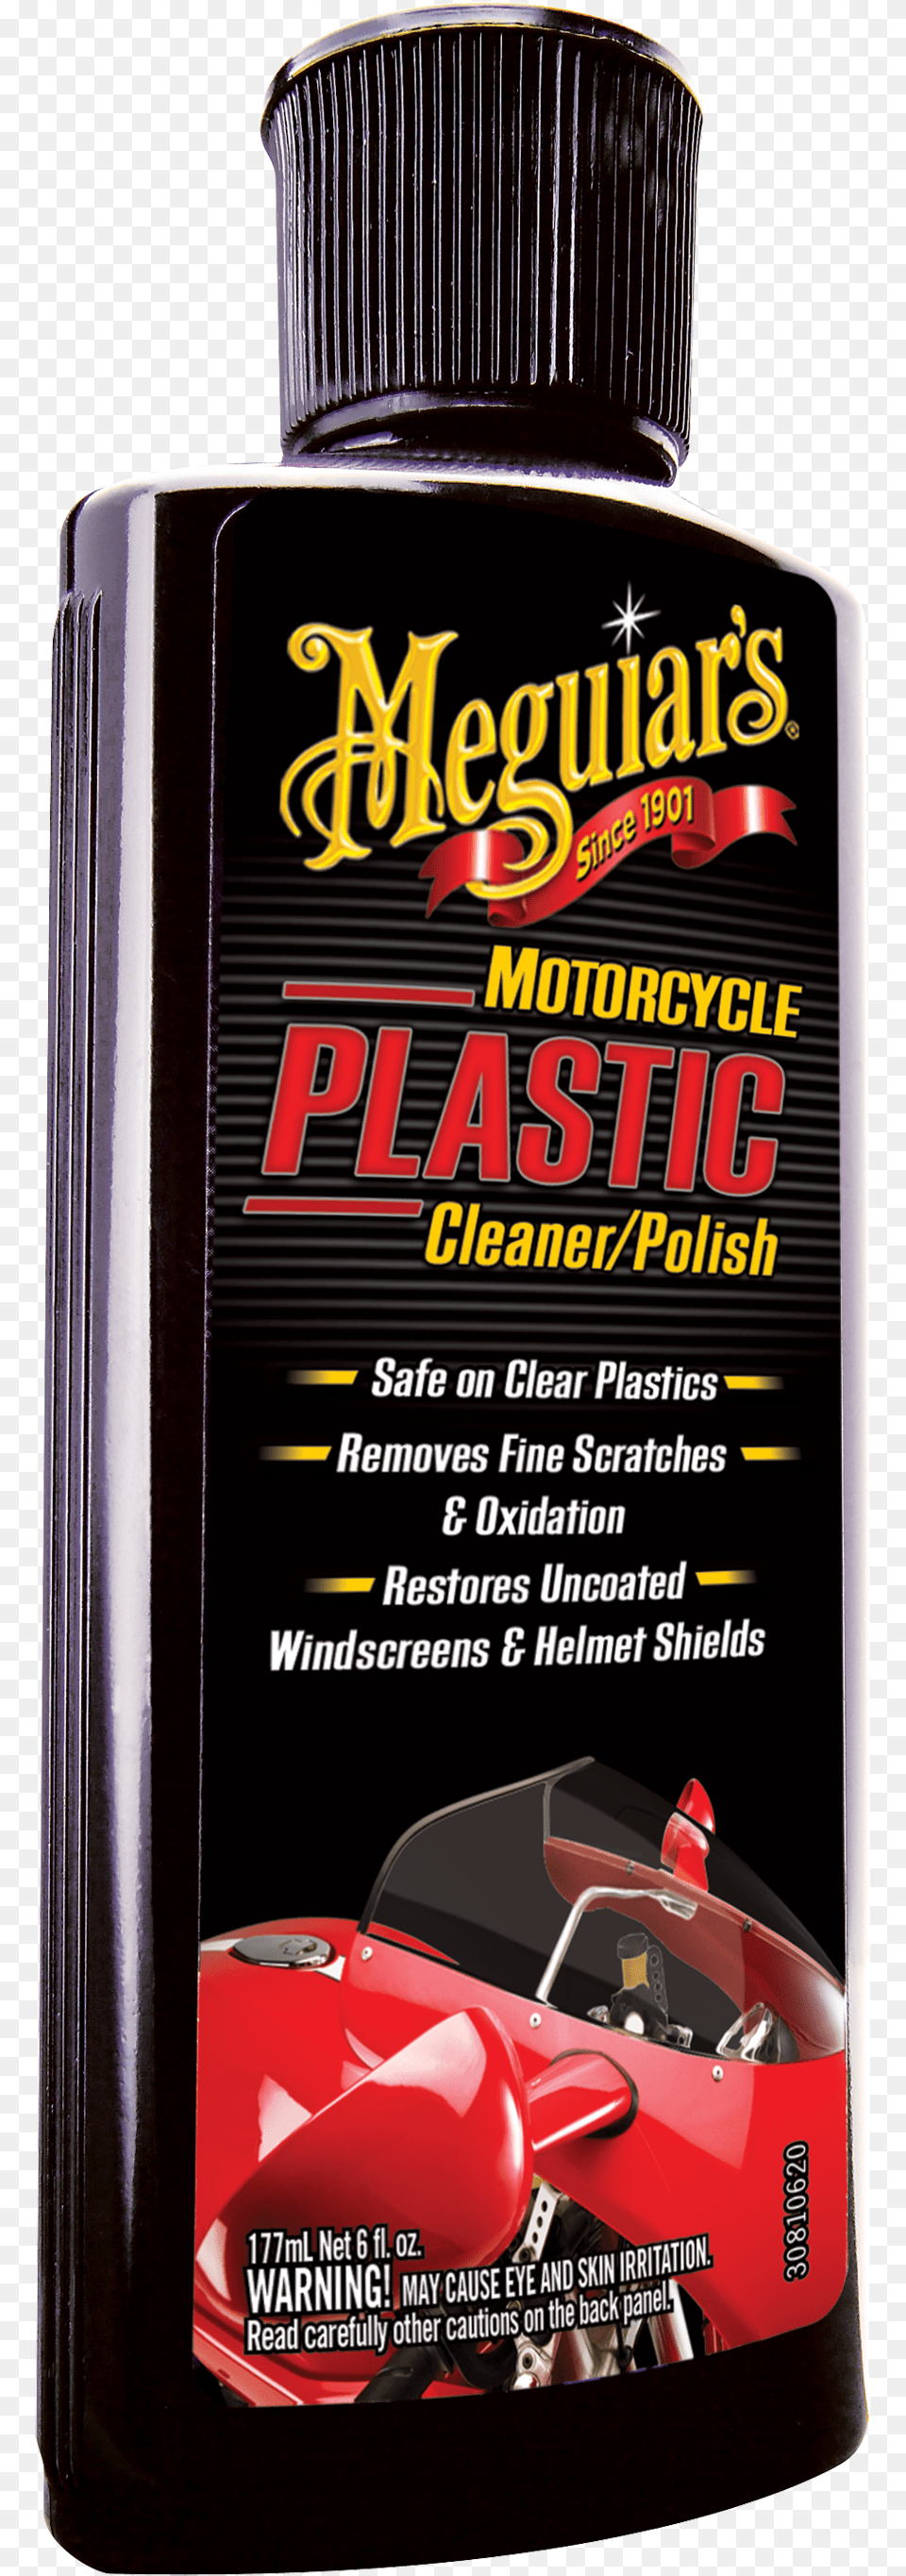 Motorcycle Plastic Cleaner Polish Meguiars Plastic Polish, Bottle, Car, Transportation, Vehicle Png Image